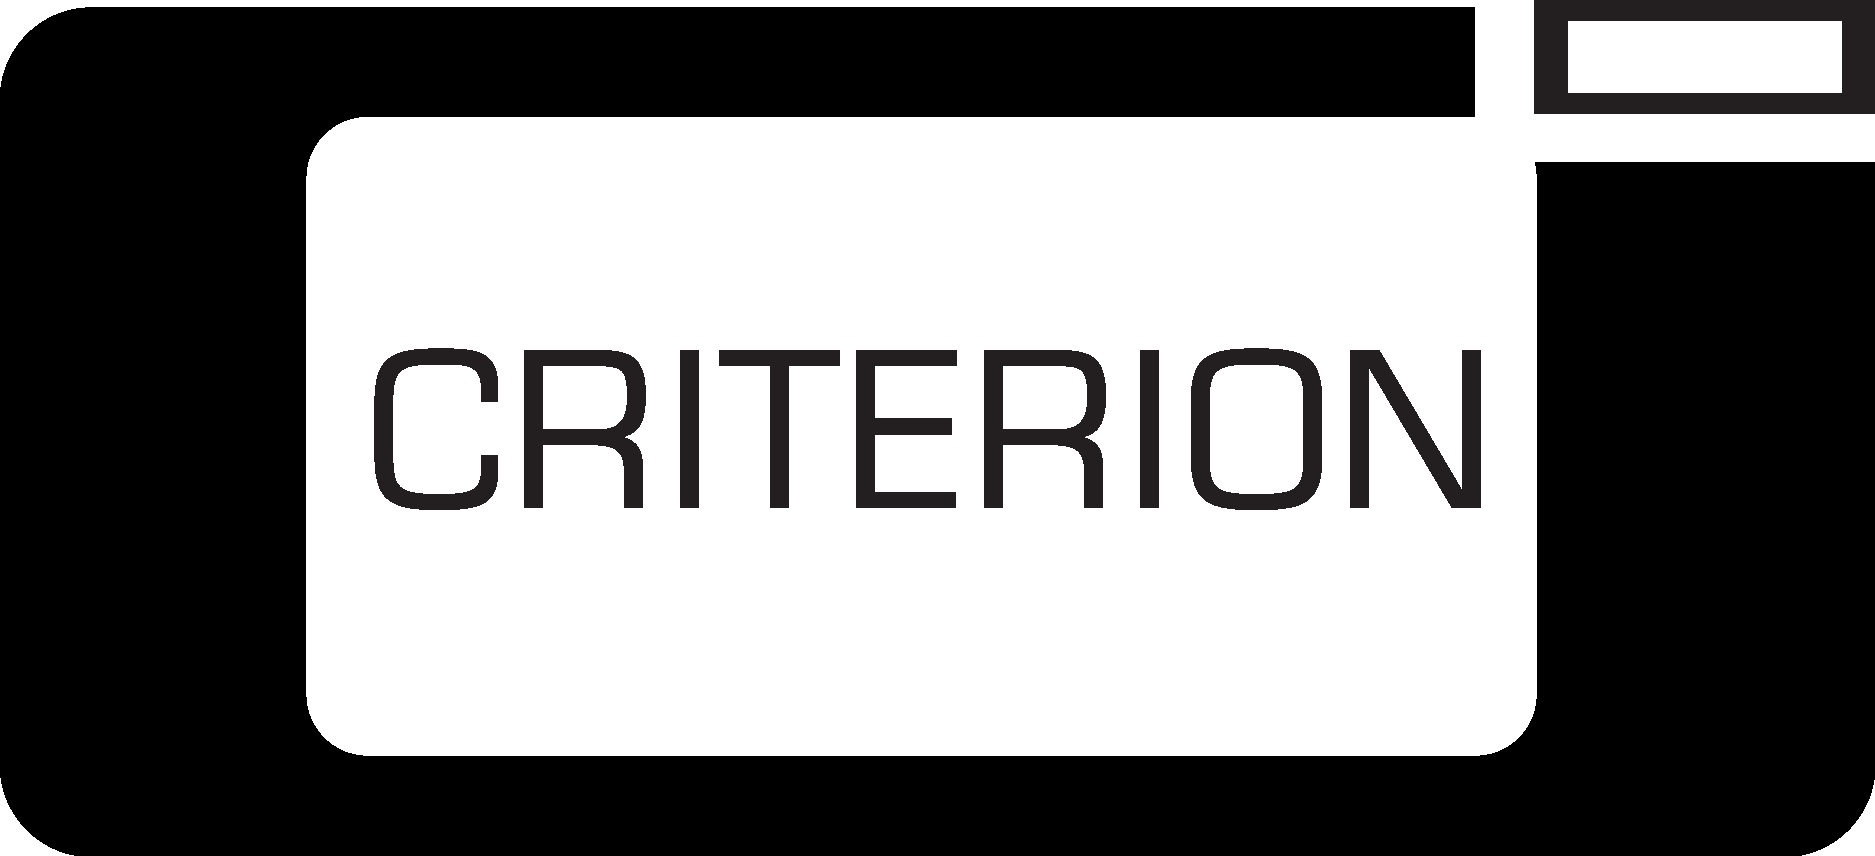 Criterion Instruments Logo Vector